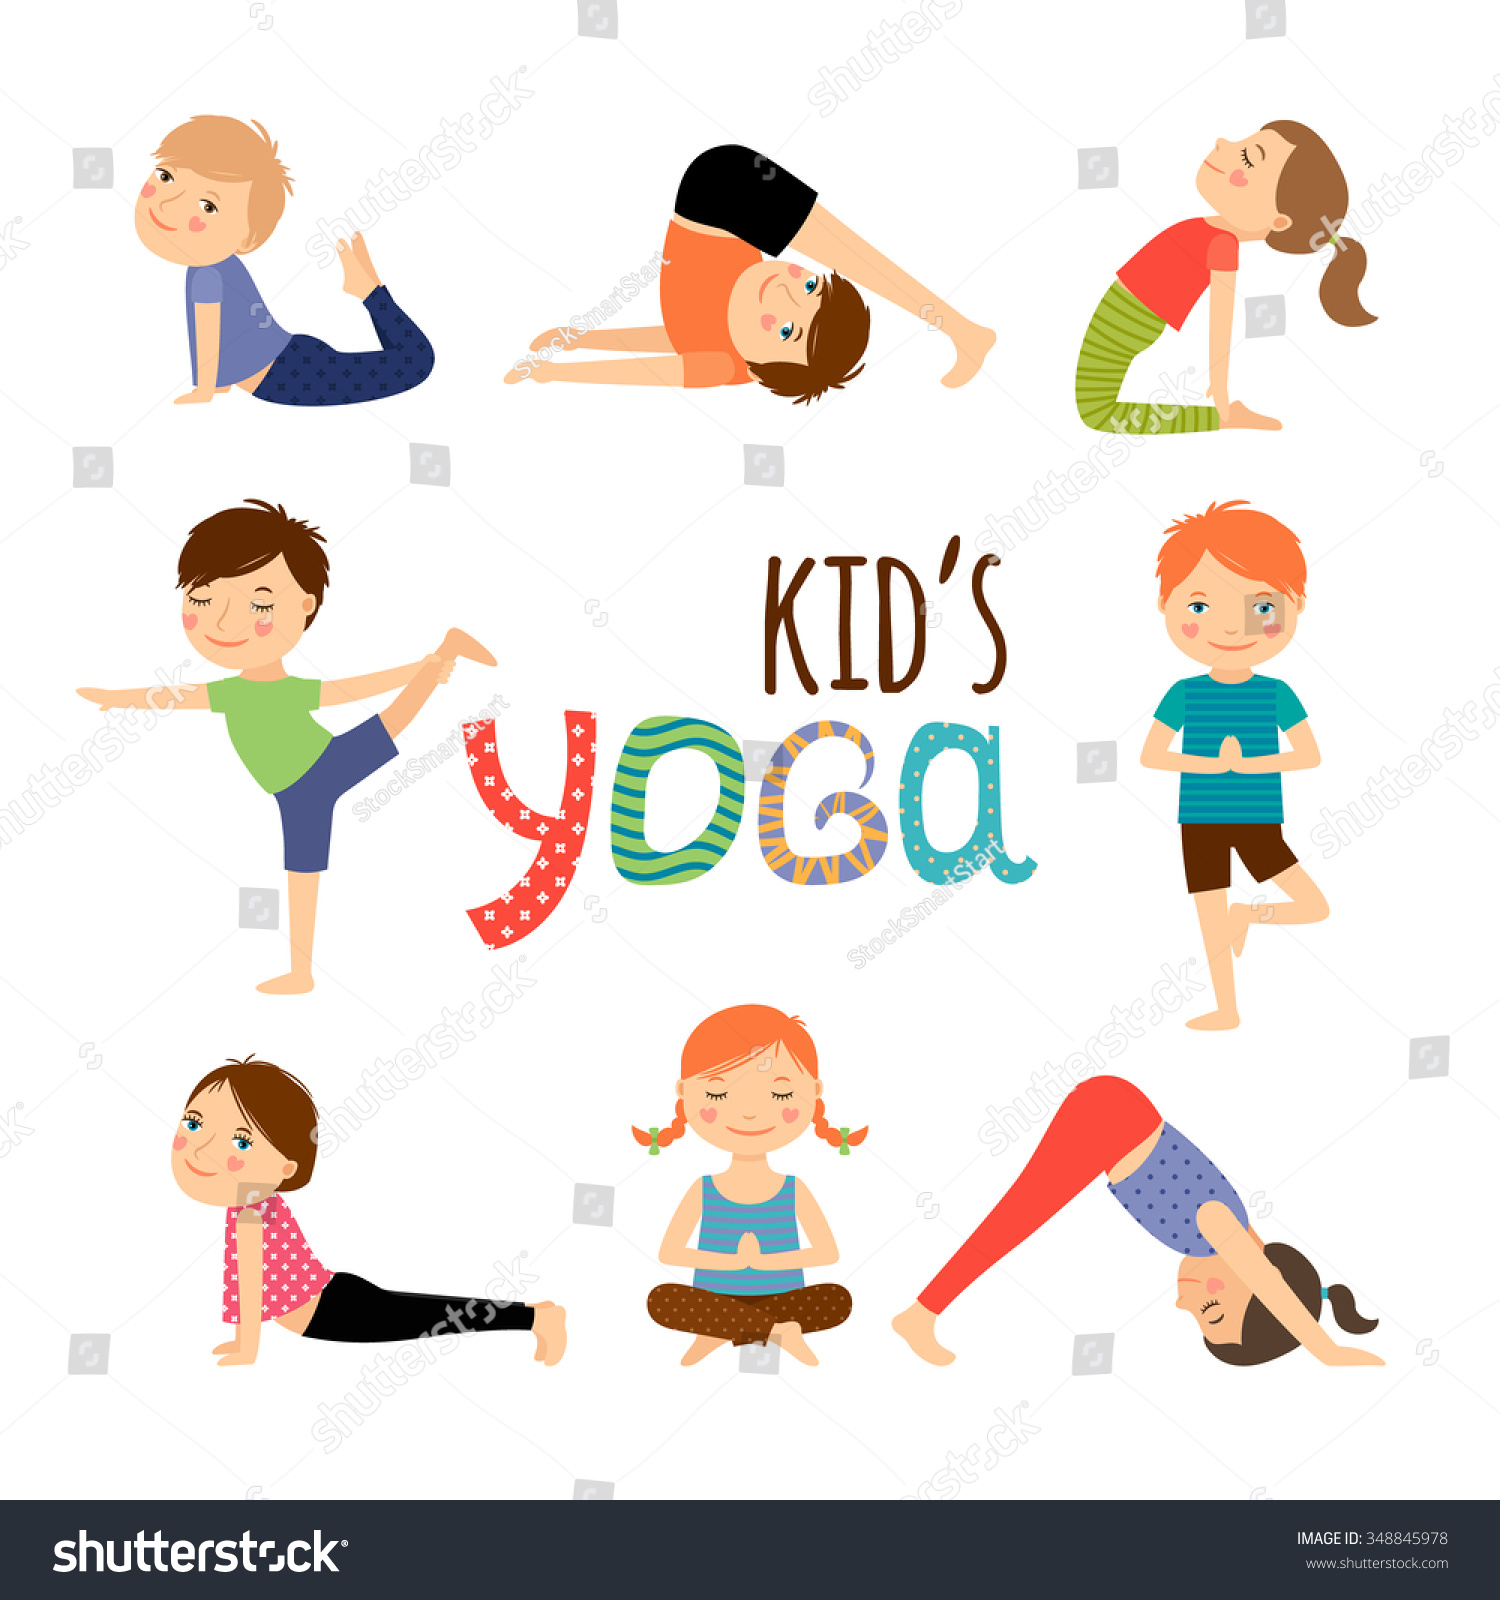 Image of a few yoga poses